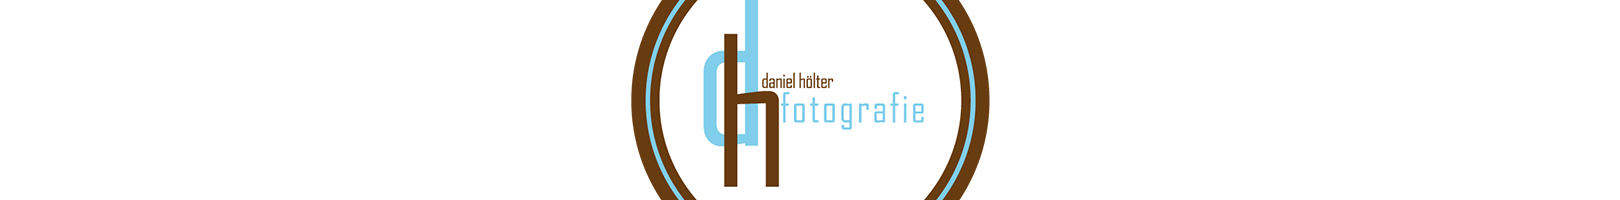 DanielHölterFotografie2